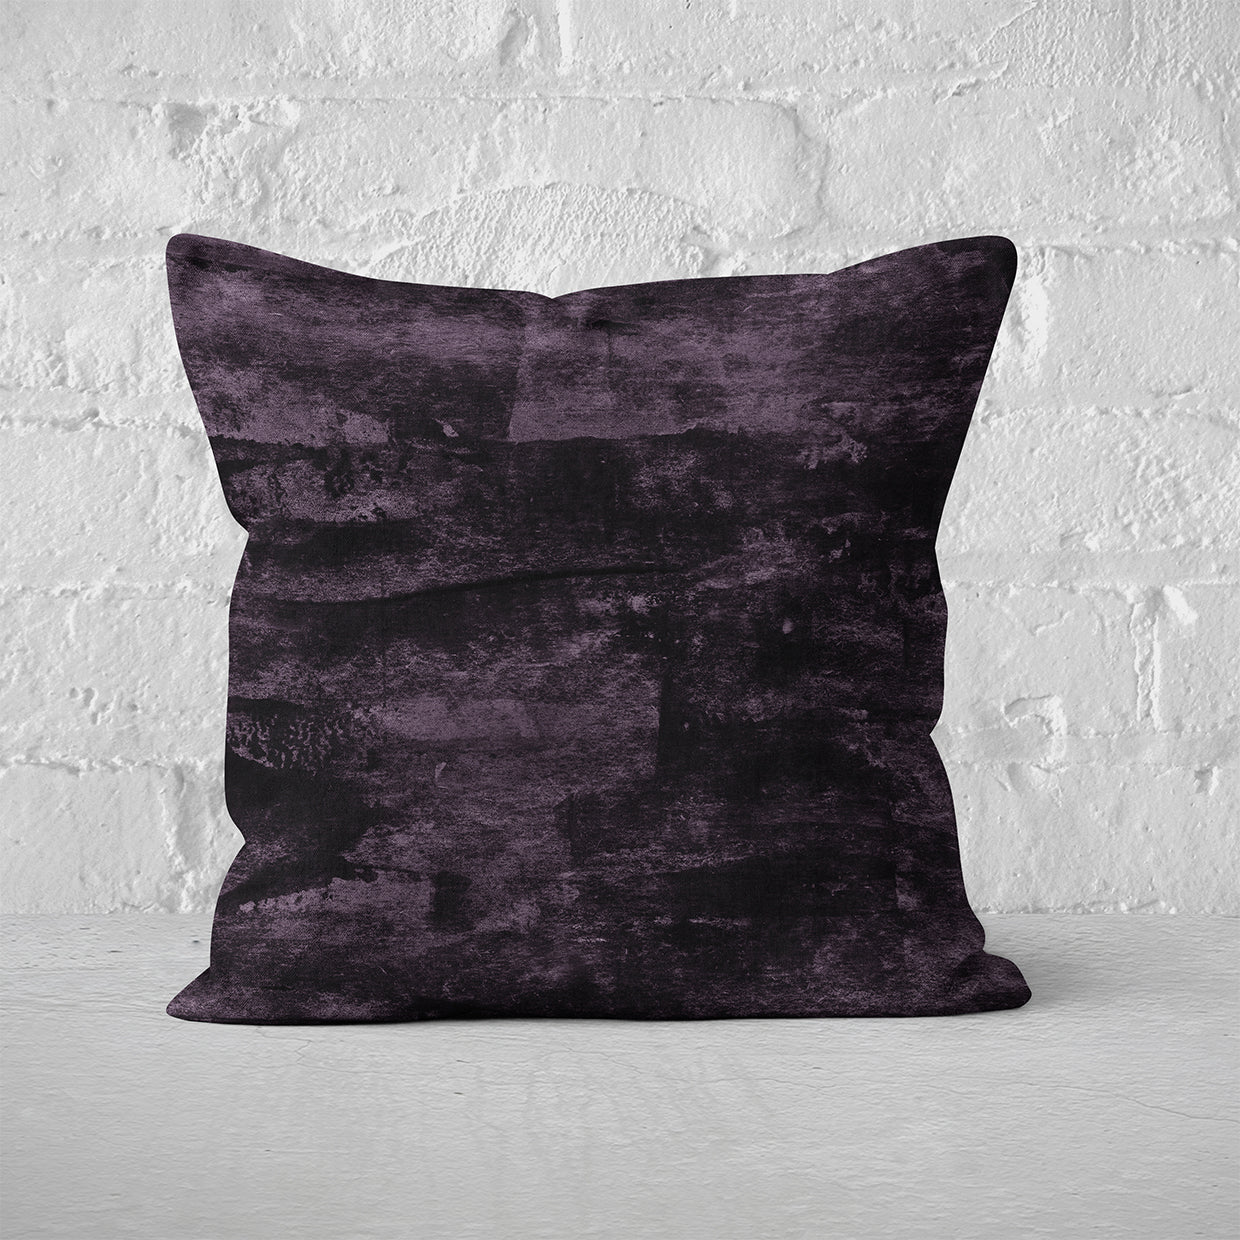 Pillow Cover Art Feature 'Satellite' - Black & Lavender - Cotton Twill